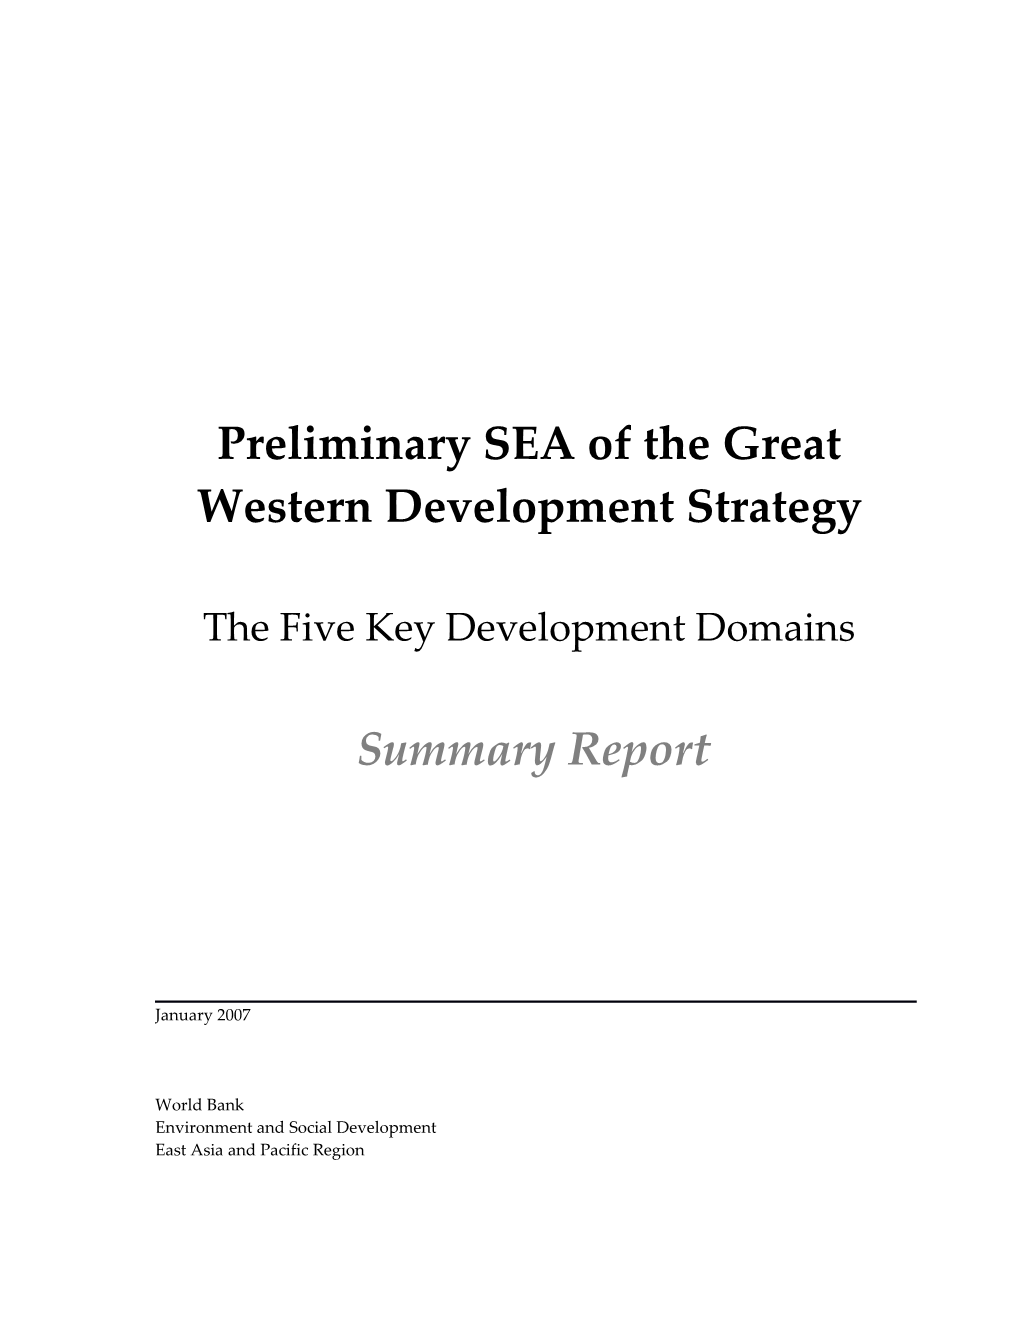 Preliminarysea of the Great Western Development Strategy